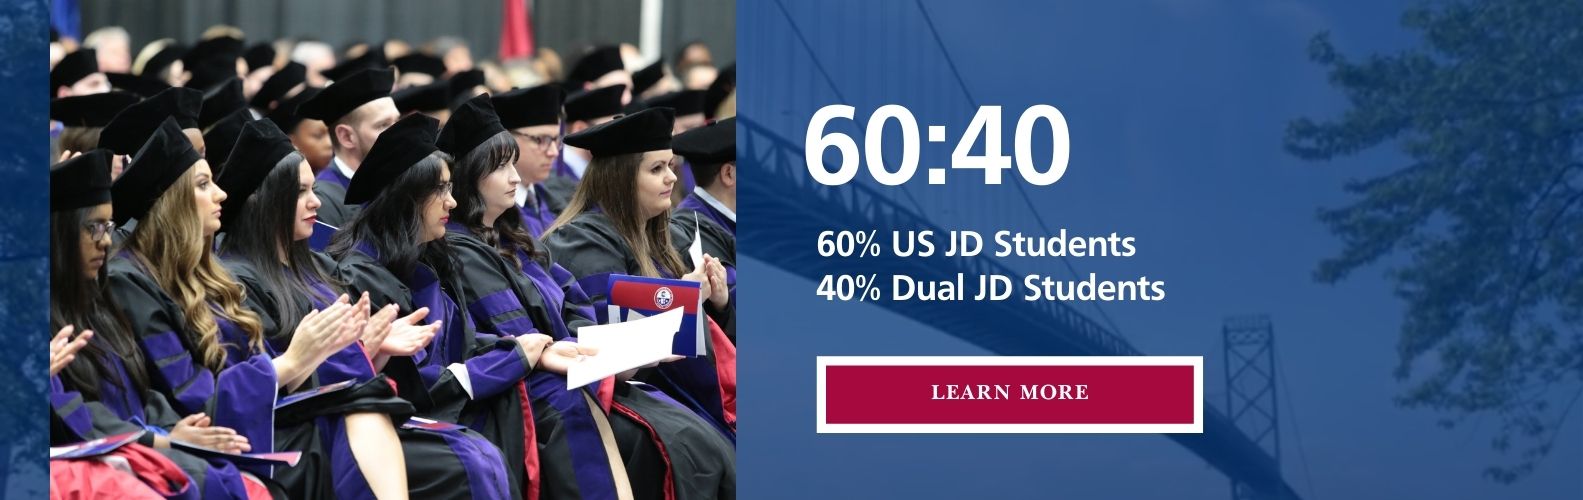 60 percent US JD students and 40 percent dual JD student